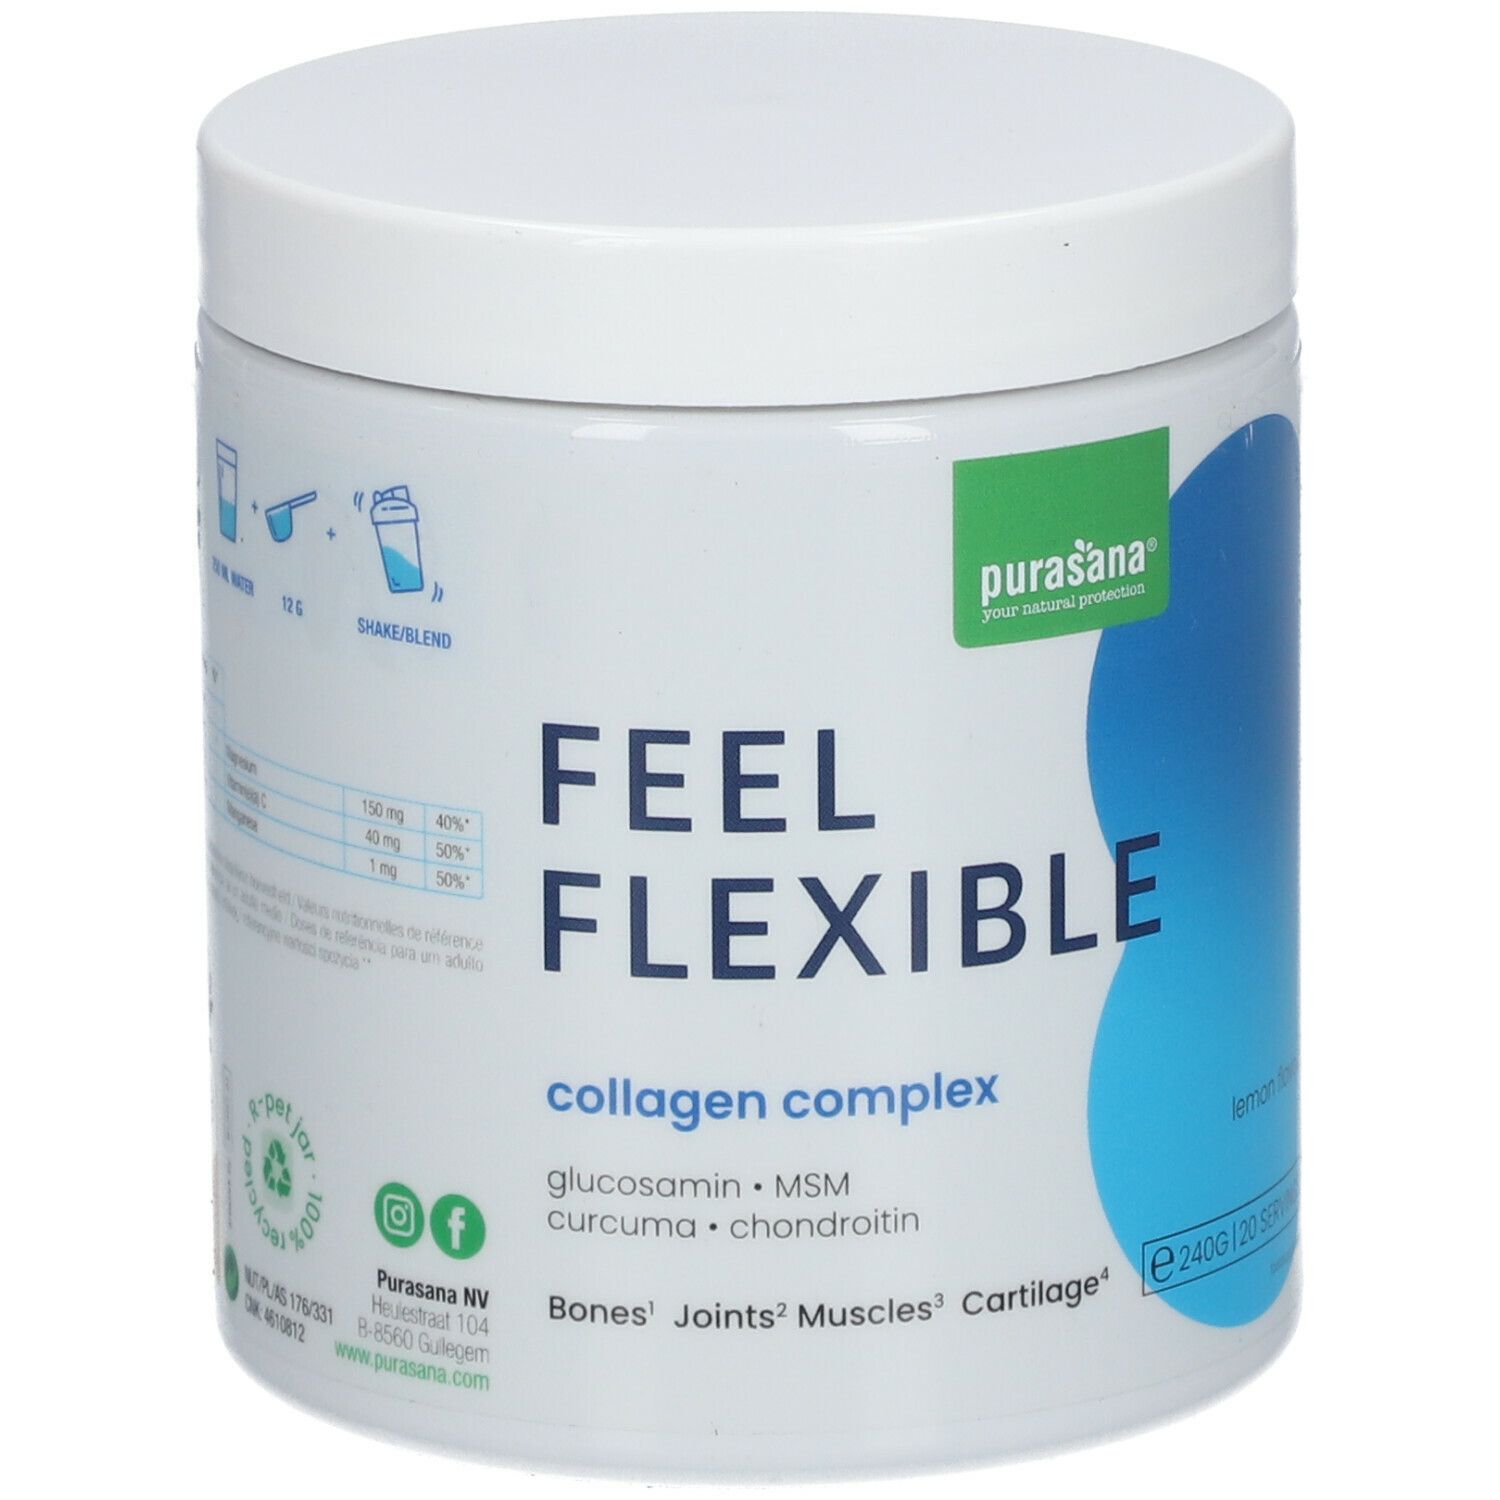 Purasana Feel Flexible Collagen complex